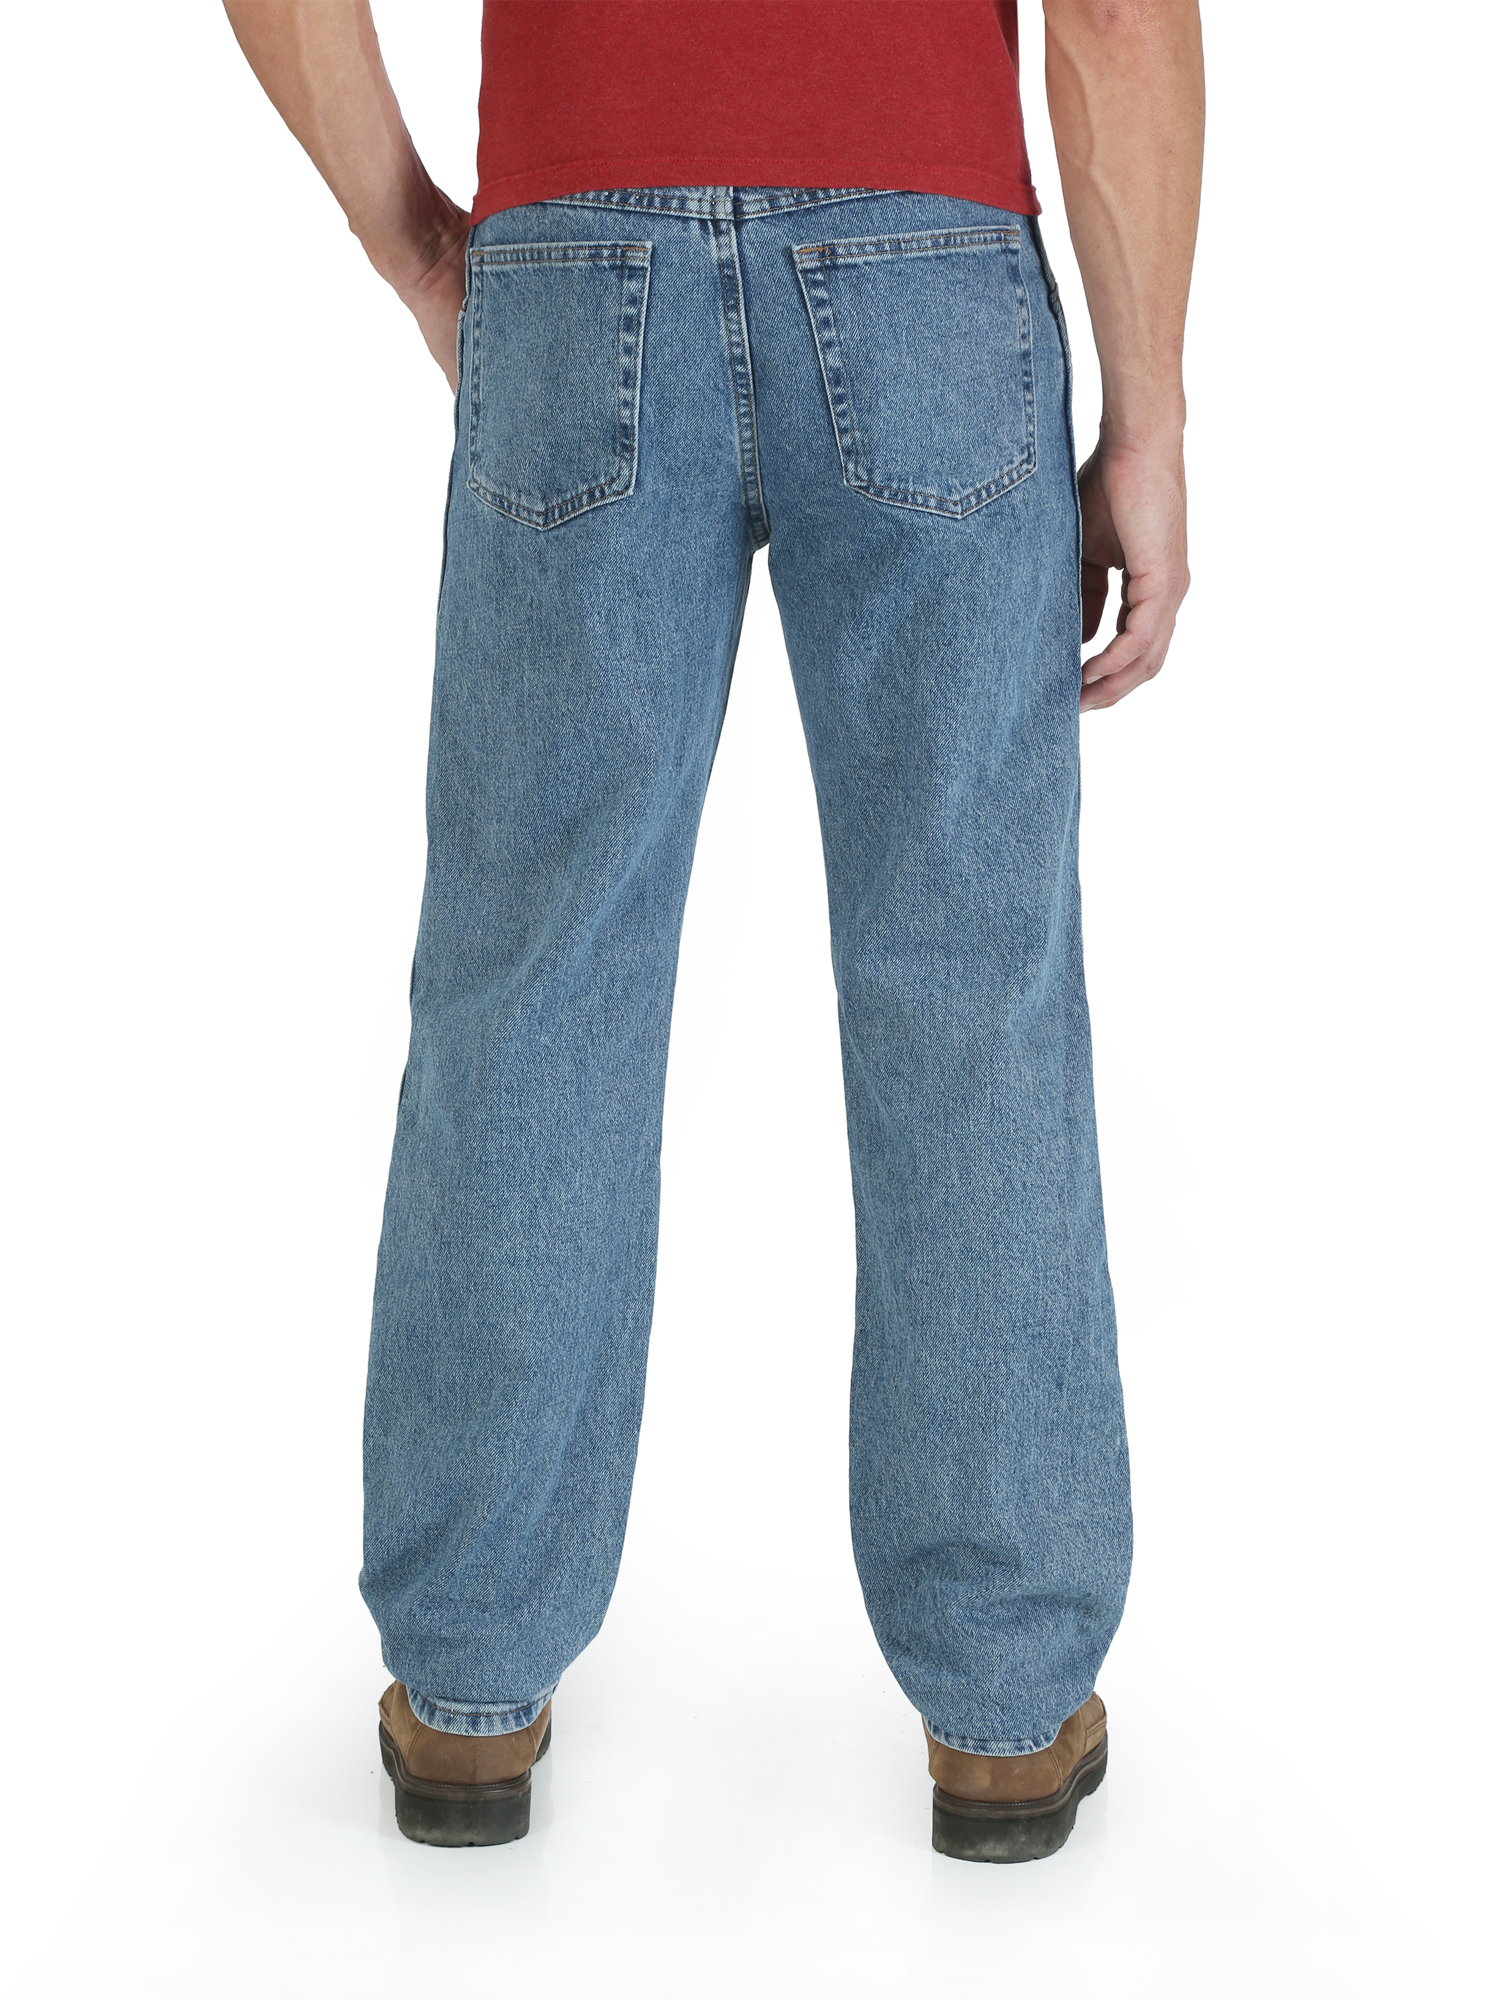 Wrangler Rustler Men's and Big Men's Regular Fit Jeans - image 5 of 5